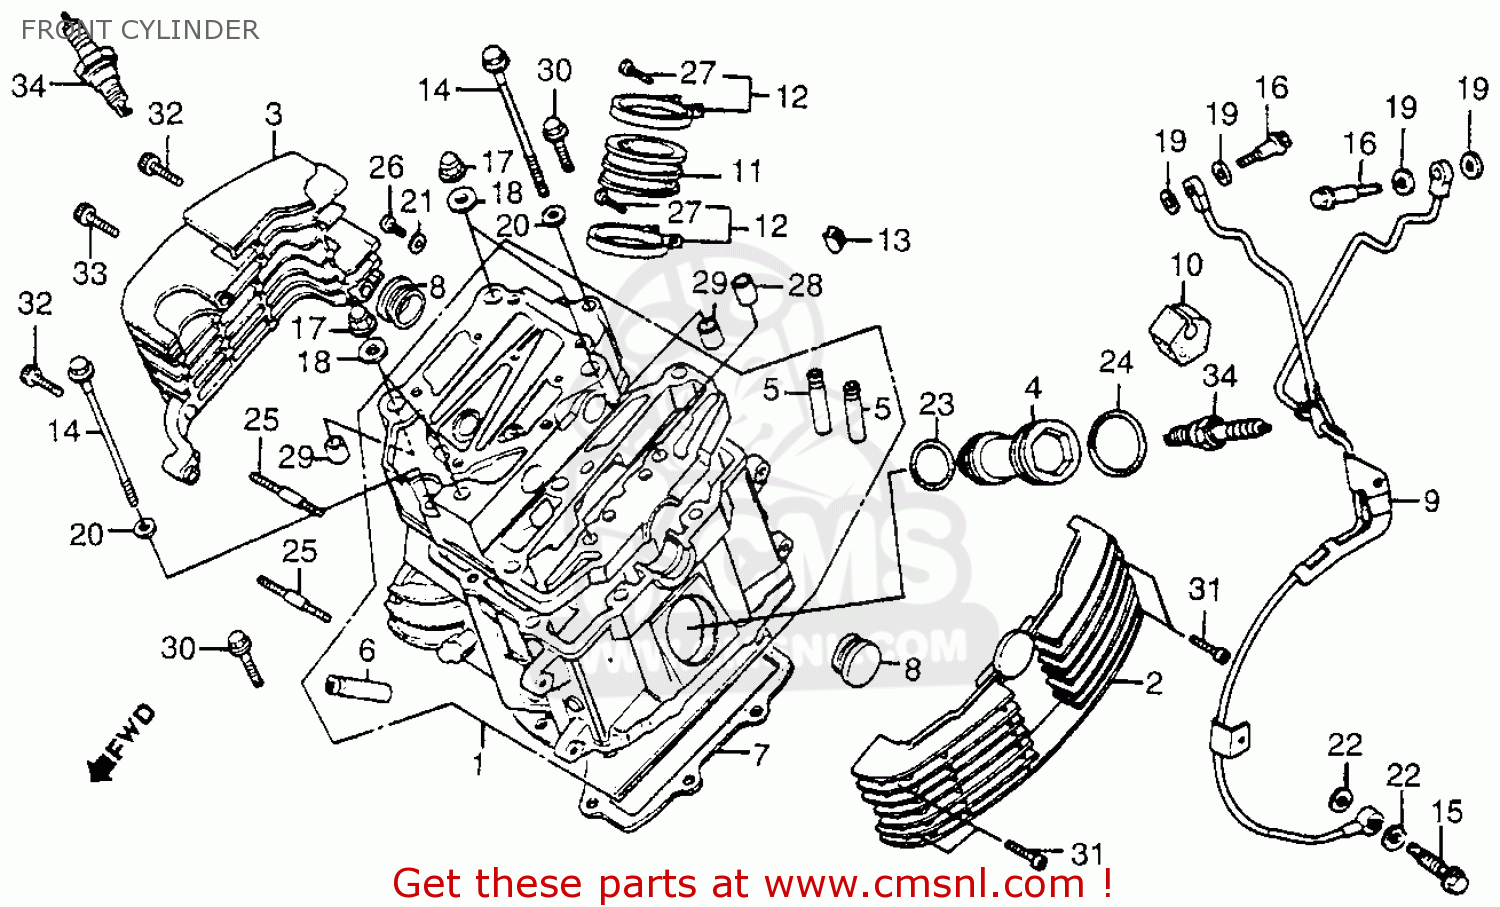 1986 Honda shadow 1100 parts breakdown #6